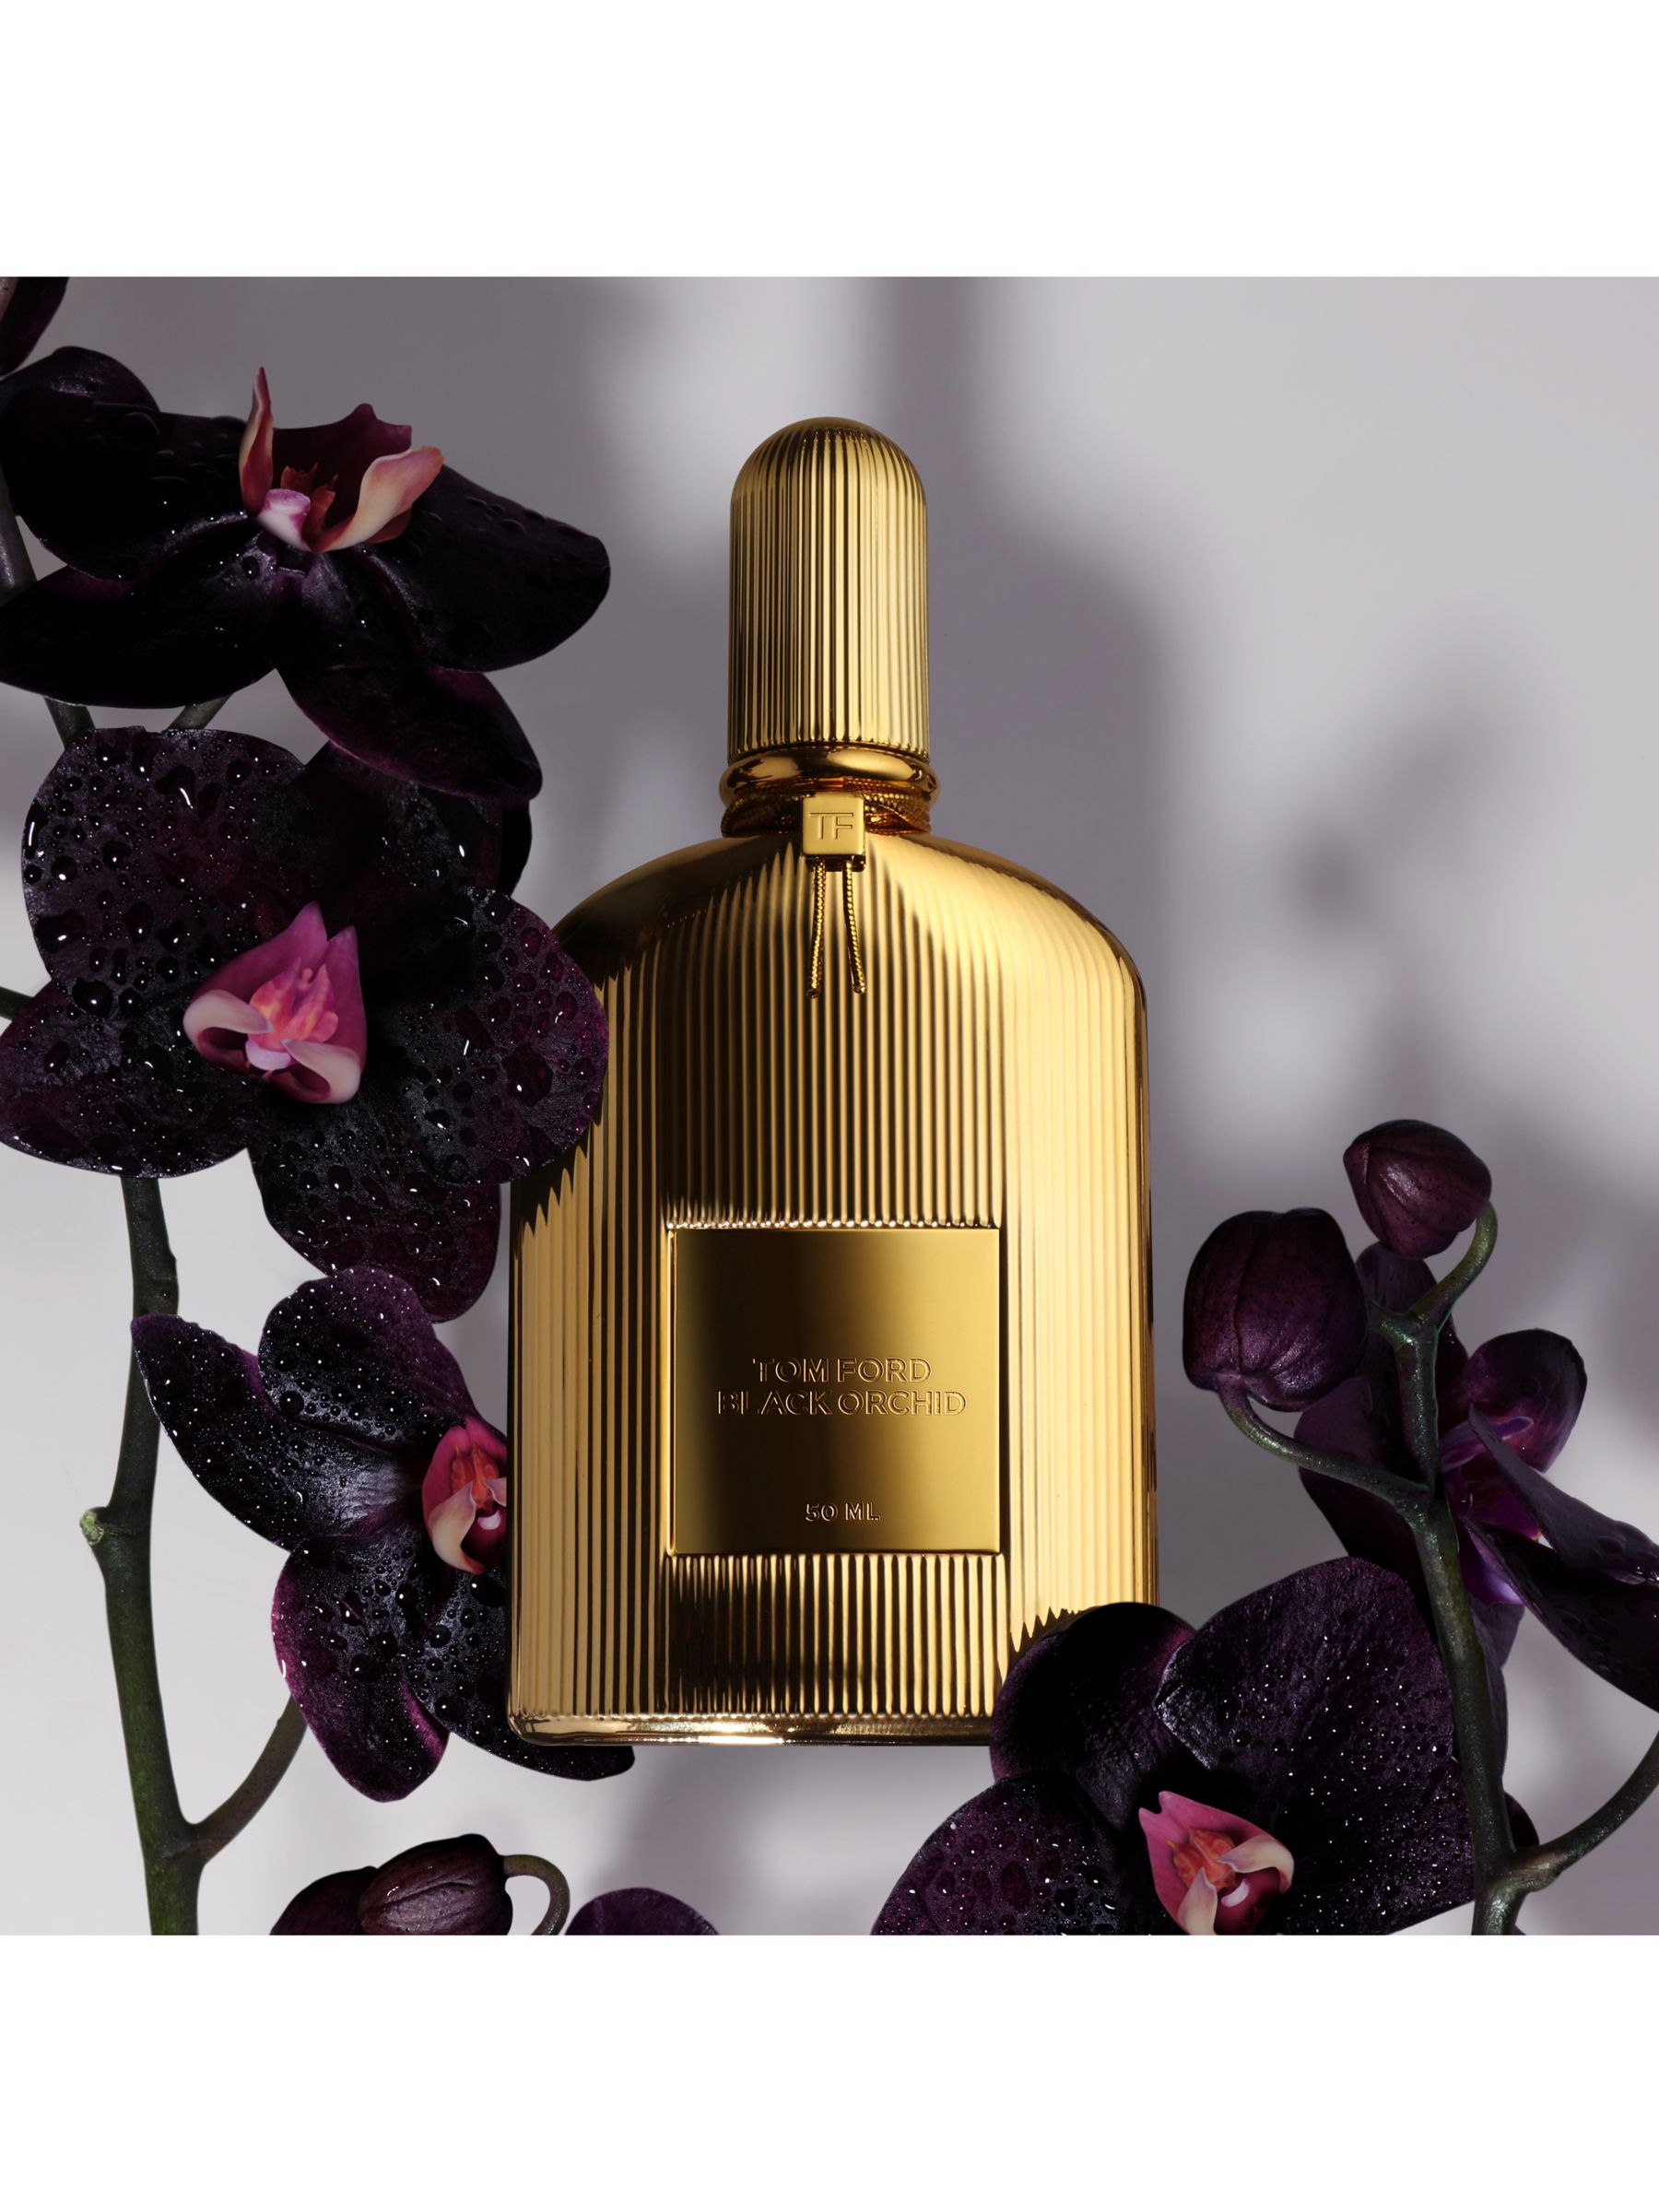 TOM FORD Black Orchid Parfum, 50ml